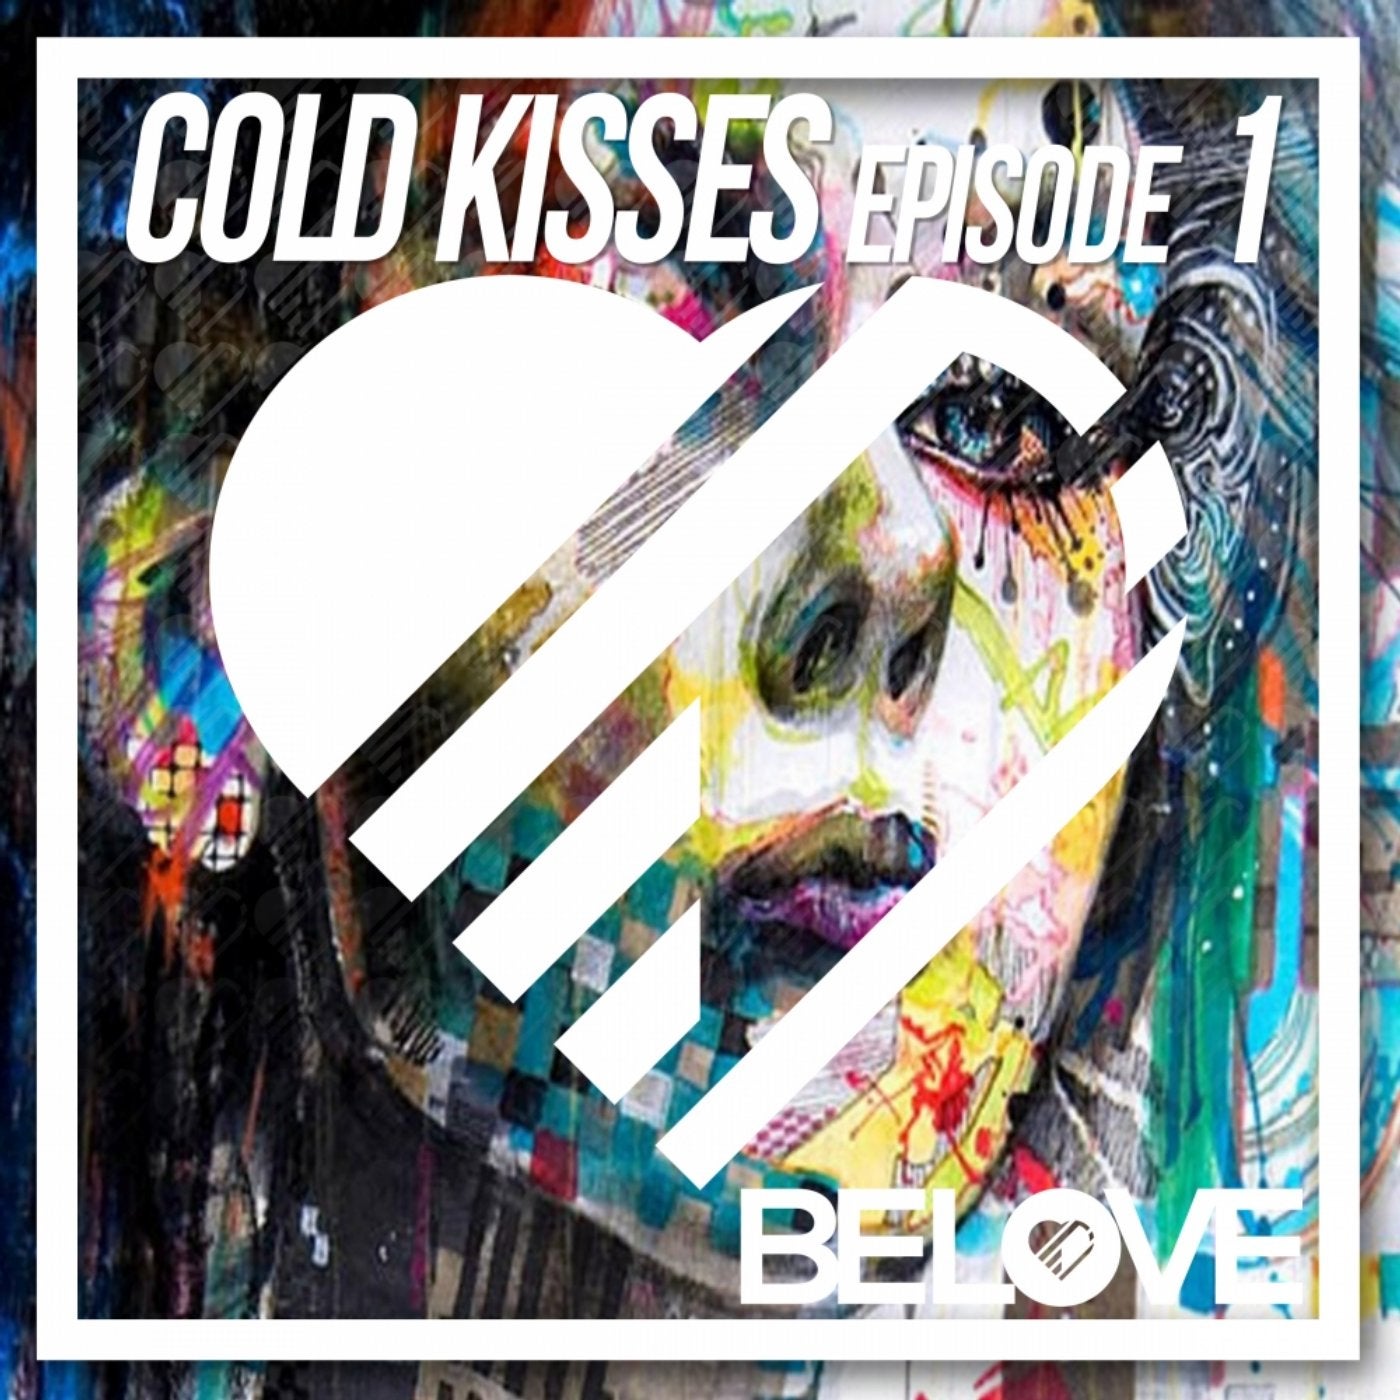 Cold Kisses, Episode 1